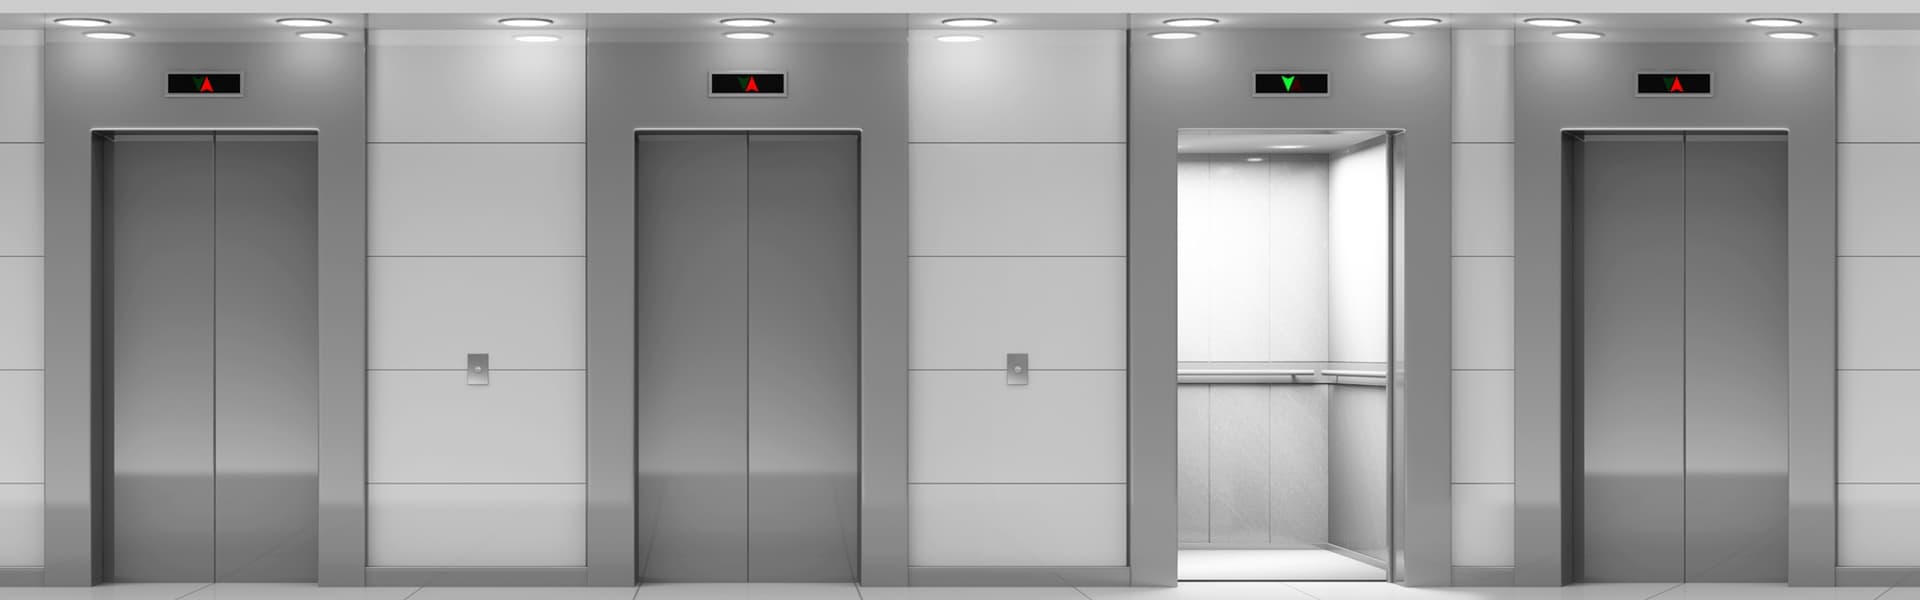 elevator slider 1